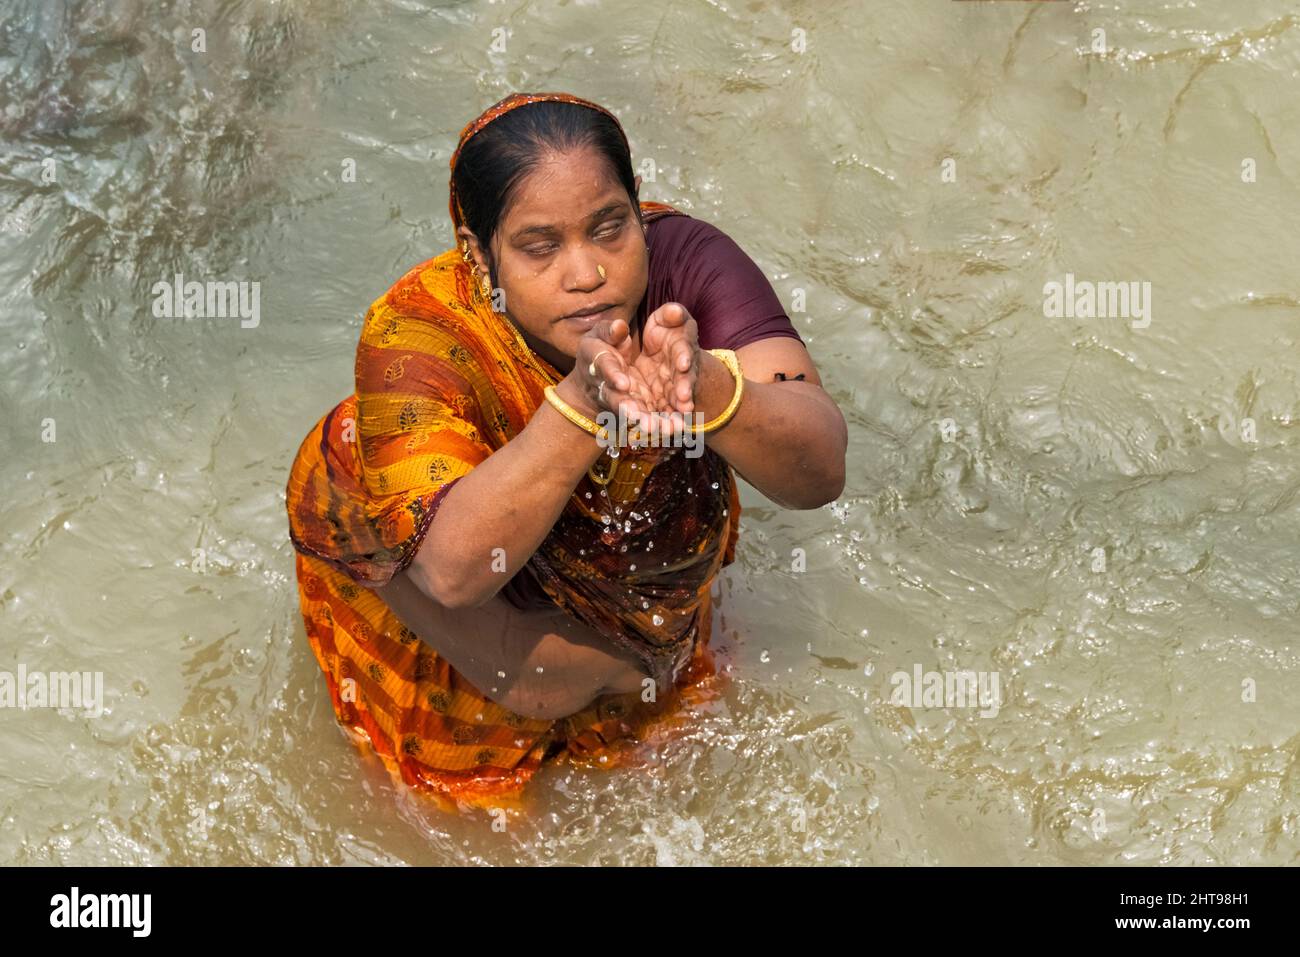 Femme en train de se baigner sainement dans le Gange River, Kolkata, Bengale occidental, Inde Banque D'Images